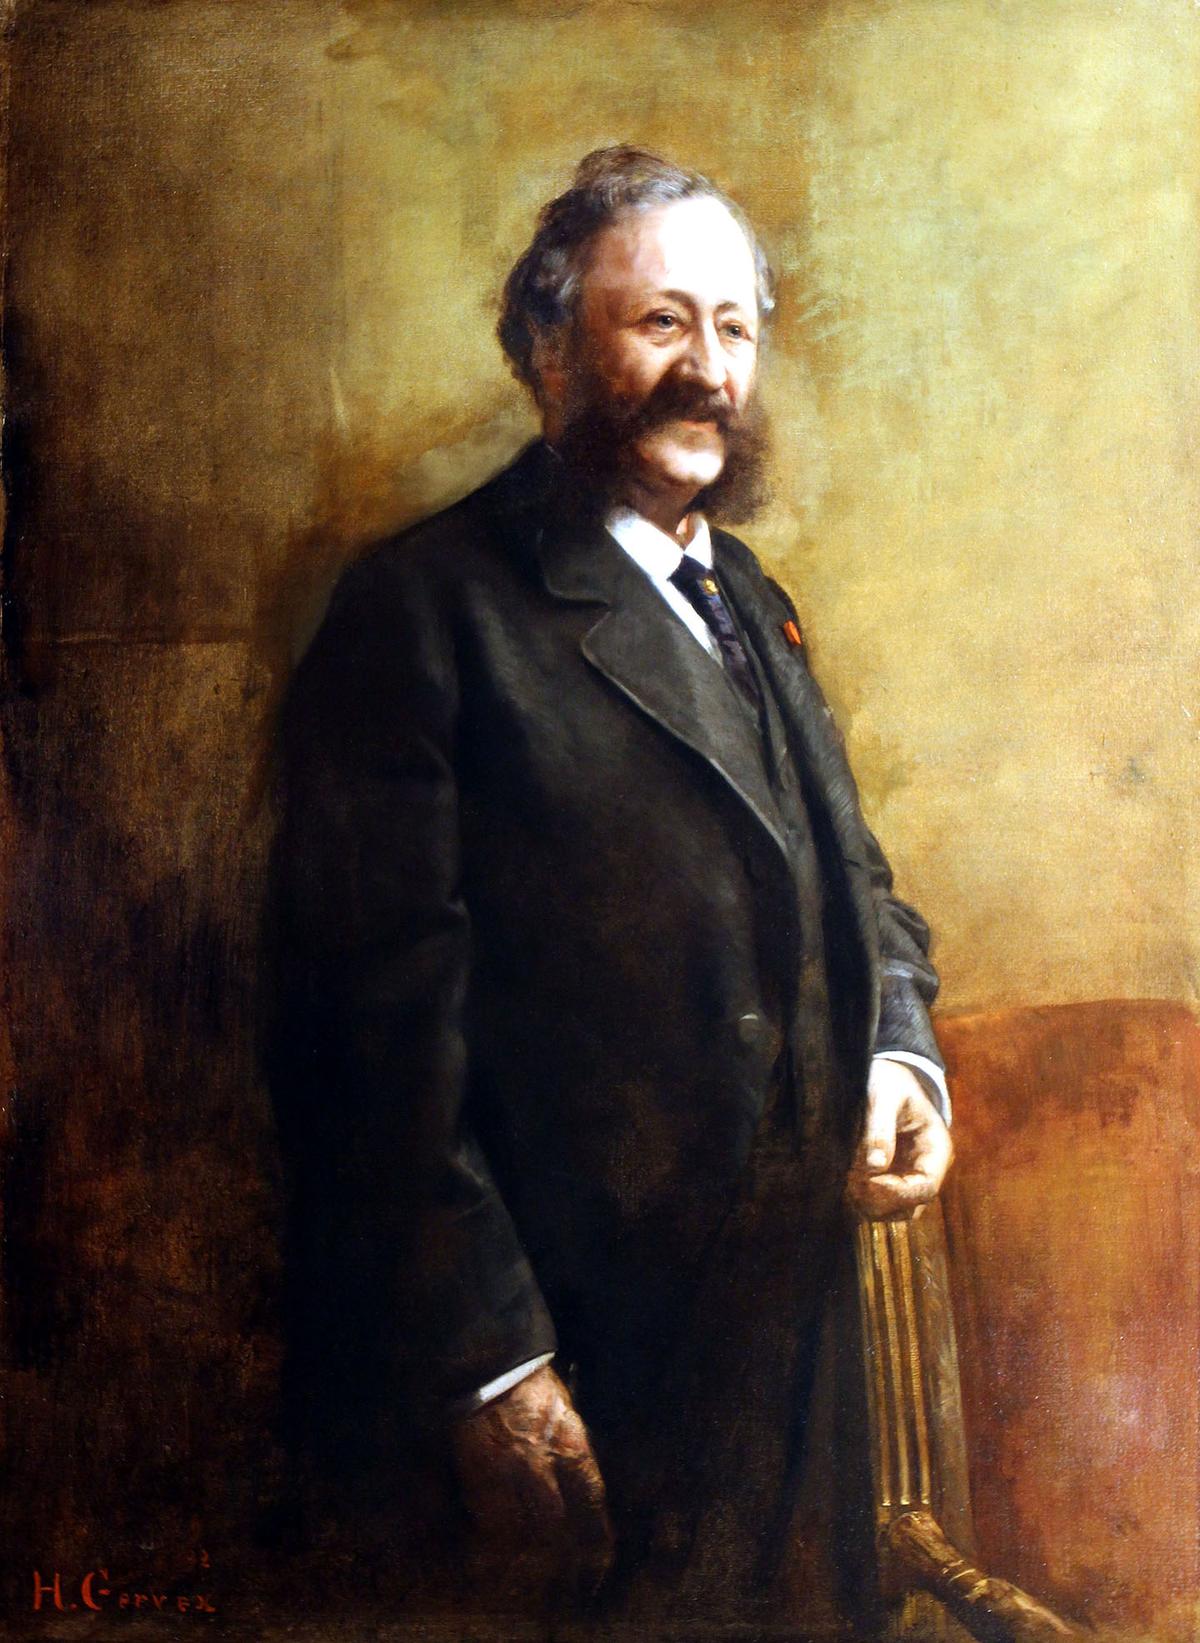 A portrait of Thomas W. Evans, 1892, by Henri Gervex. Oil on canvas. University of Pennsylvania. (Public Domain)